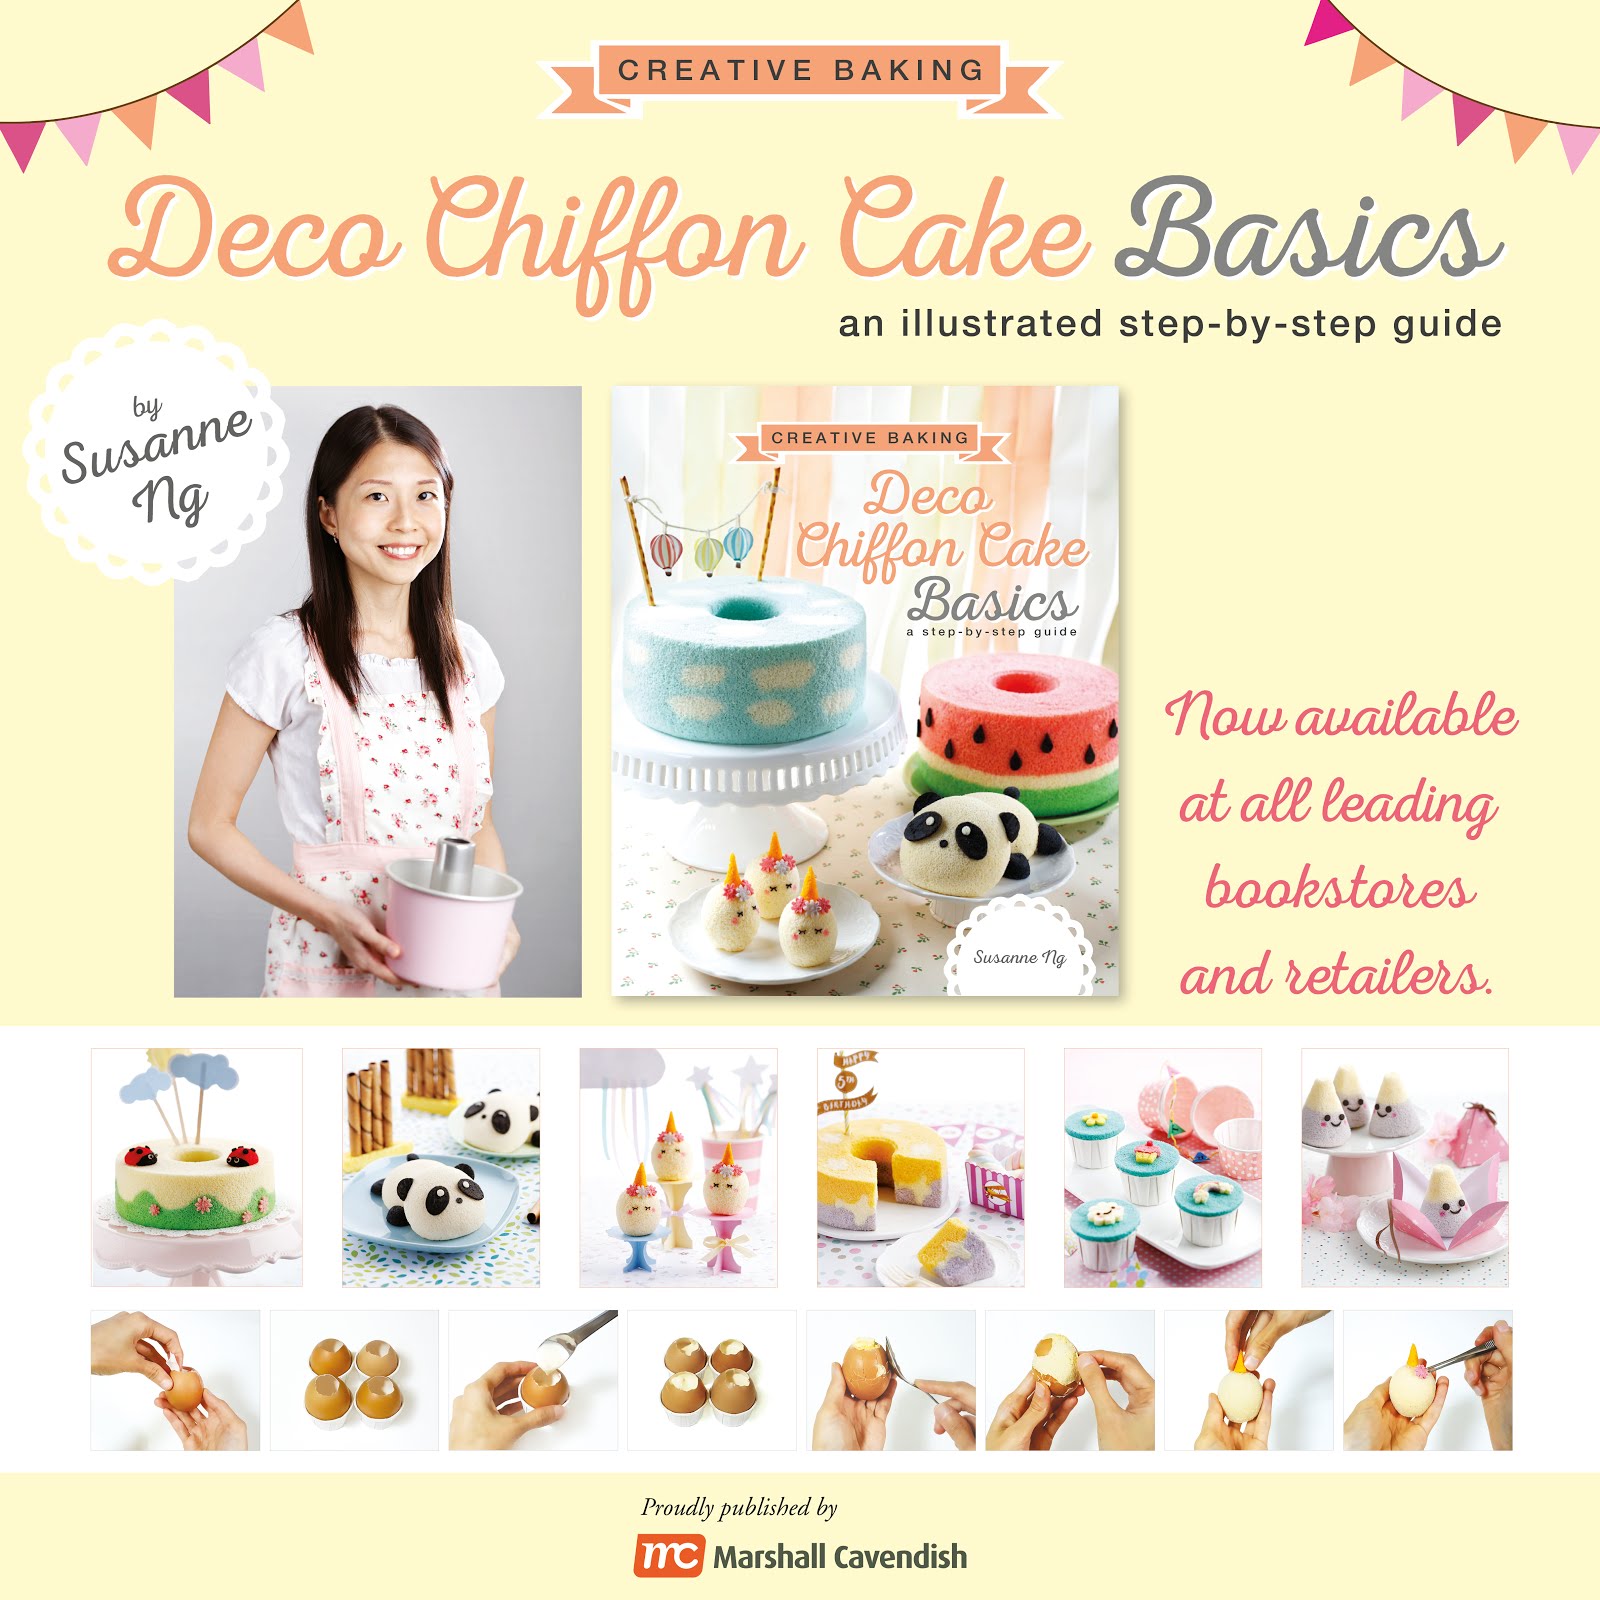 Deco Chiffon Cake Basics